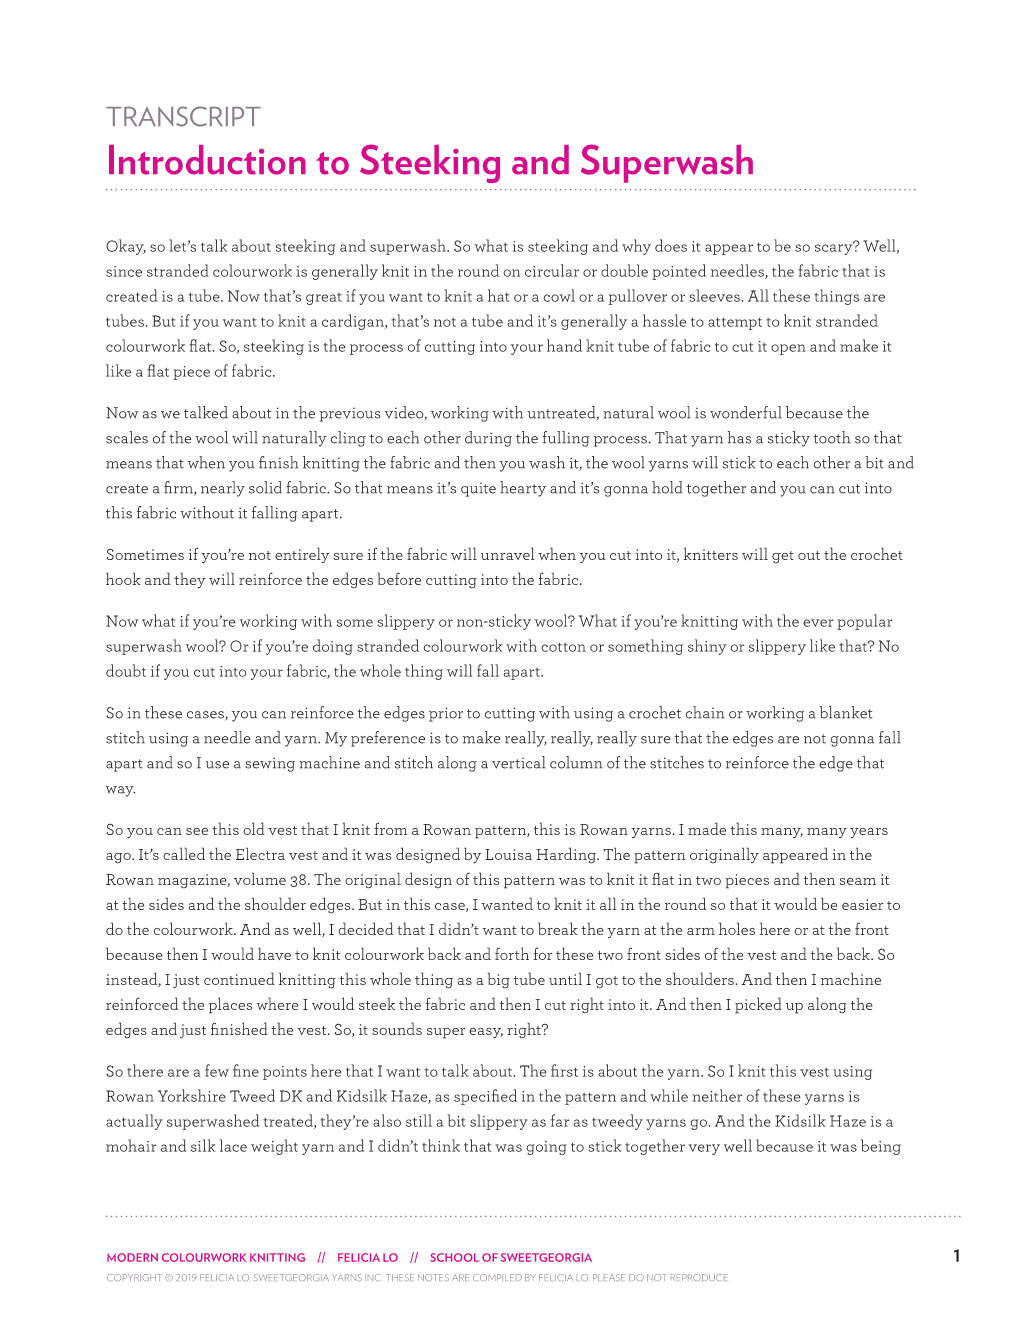 Introduction to Steeking and Superwash